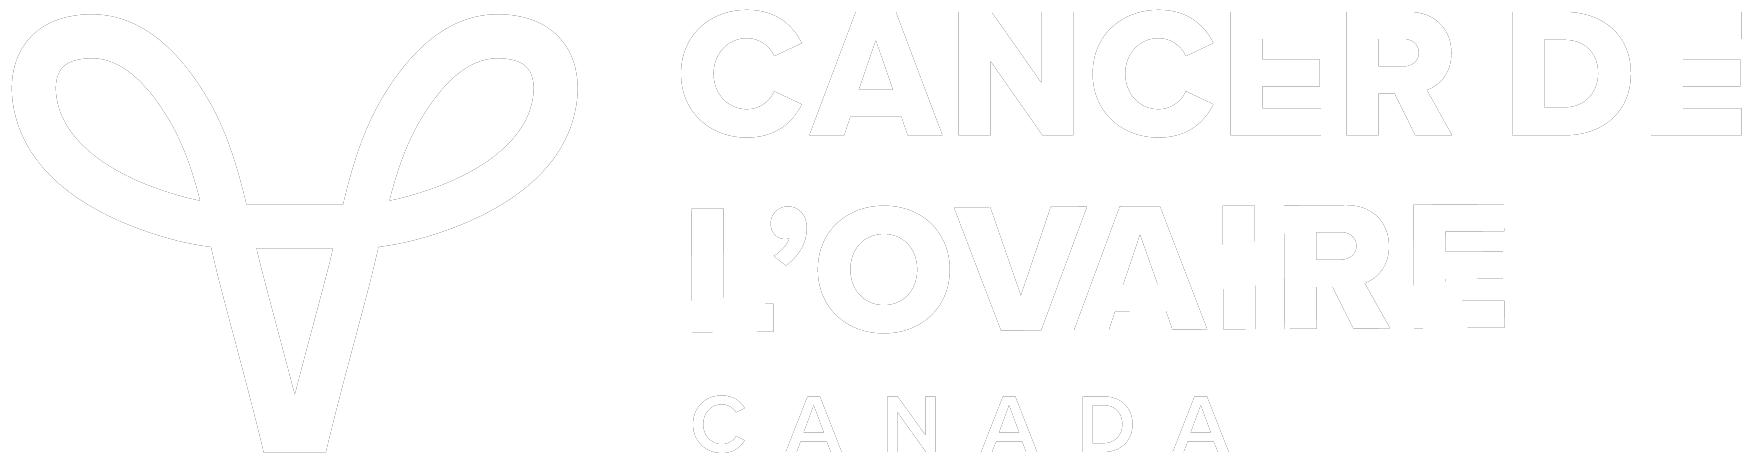 Cancer de l'ovaire Canada